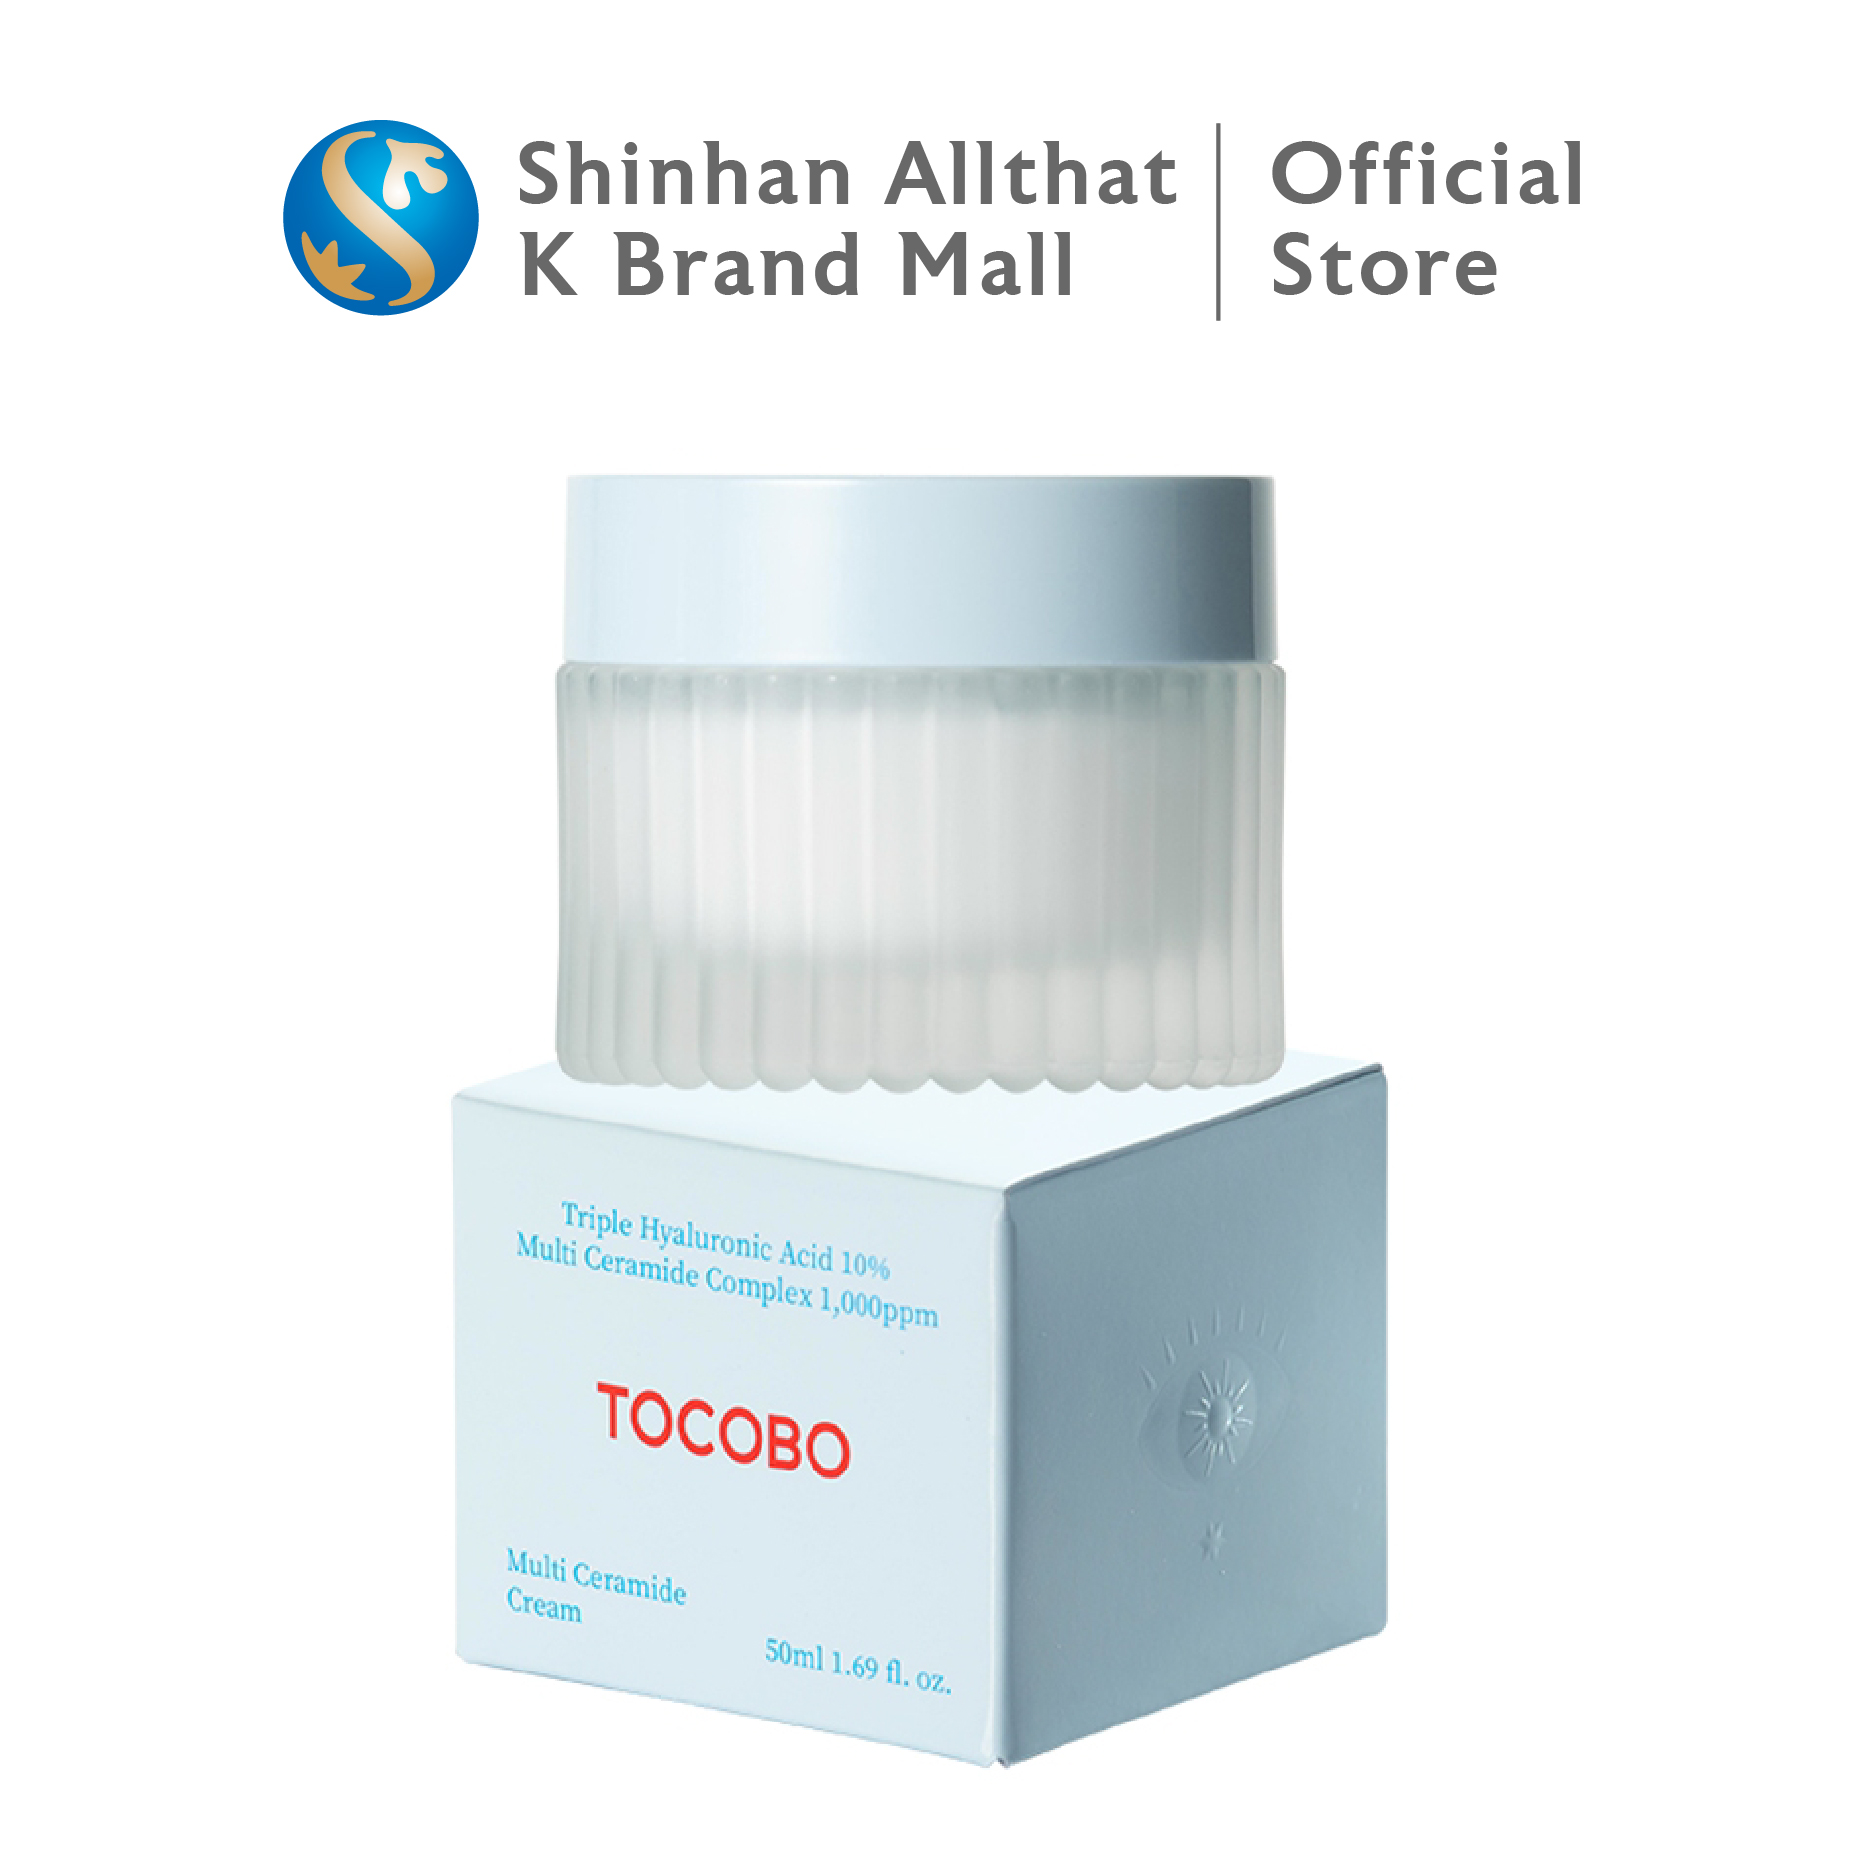 Kem Dưỡng cung cấp ẩm Tocobo Multi Ceramide Cream 50ml